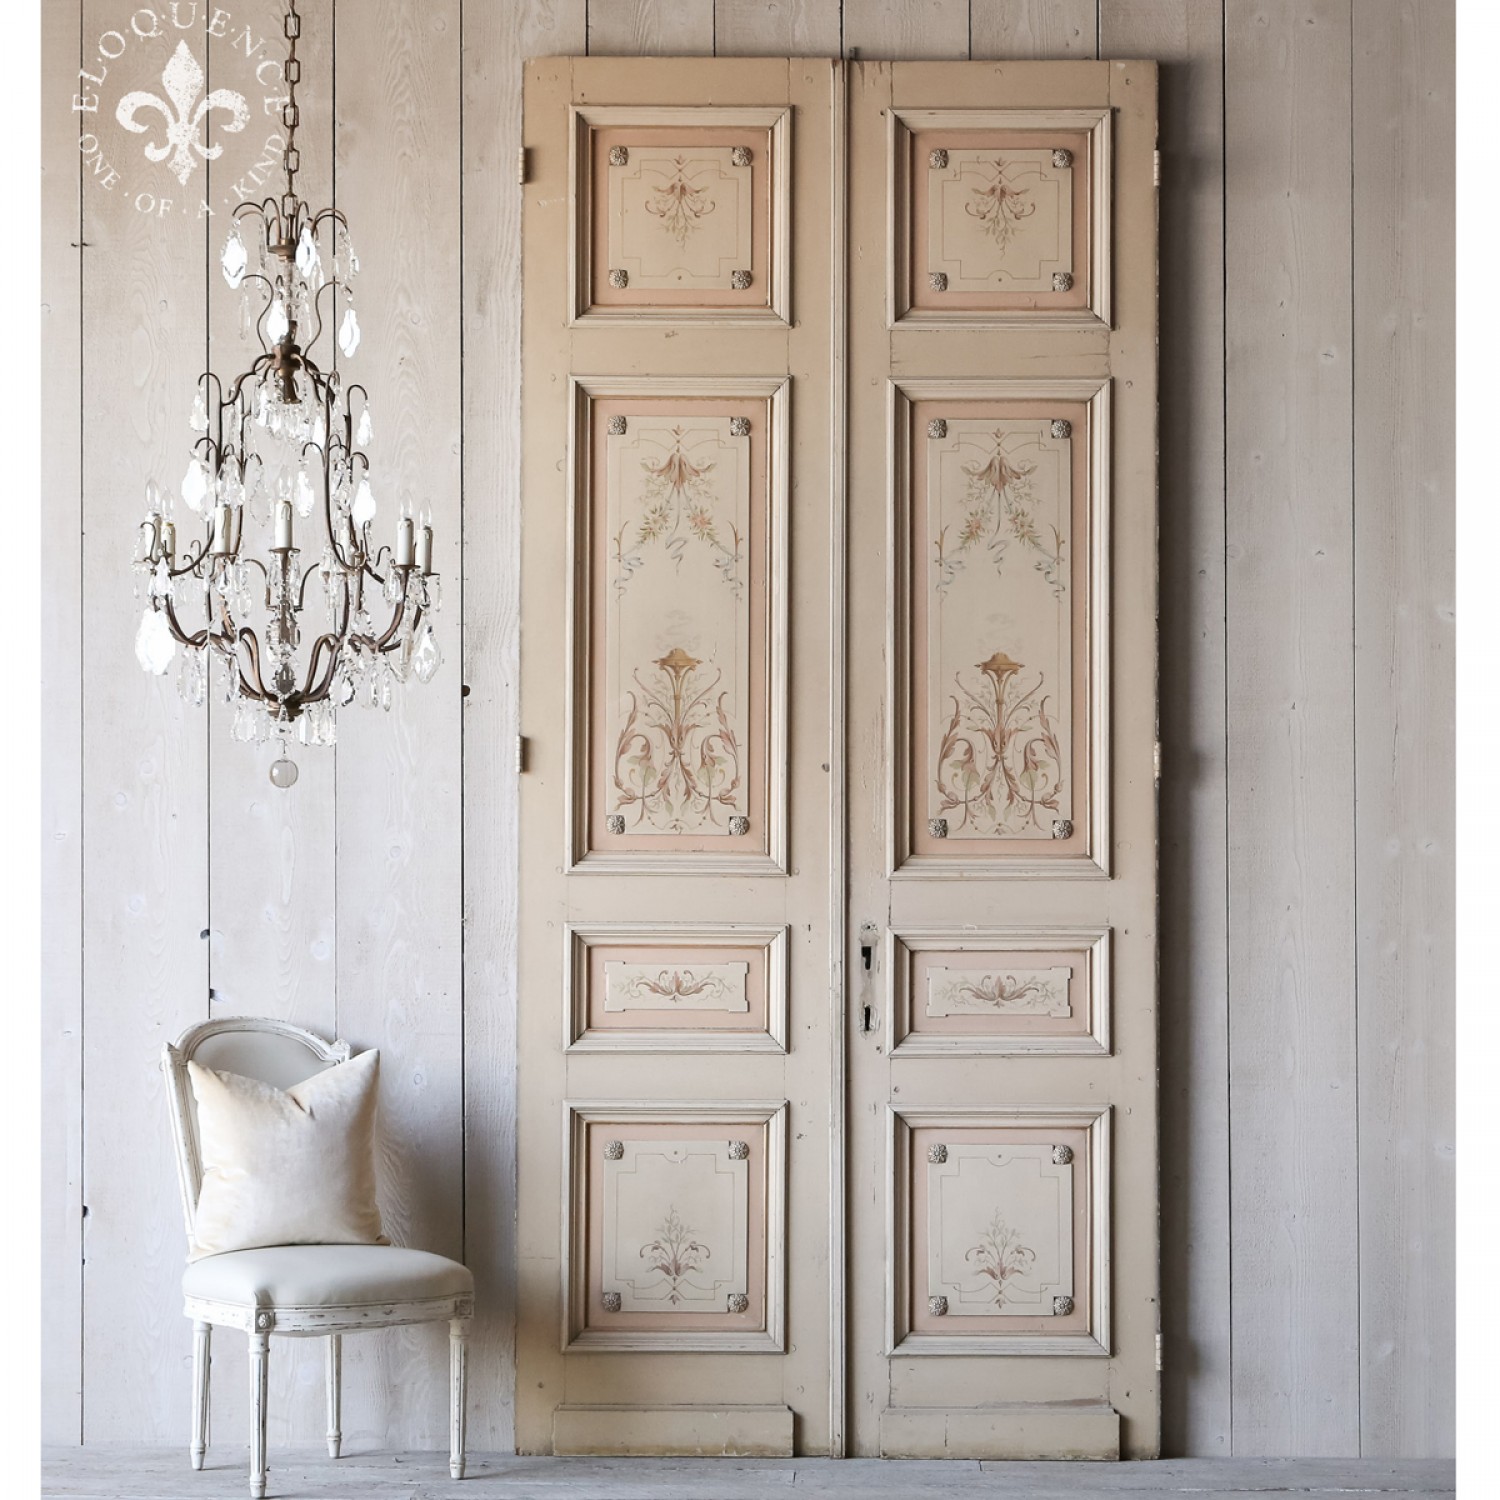 Minimalist French Door Designs for Simple Design